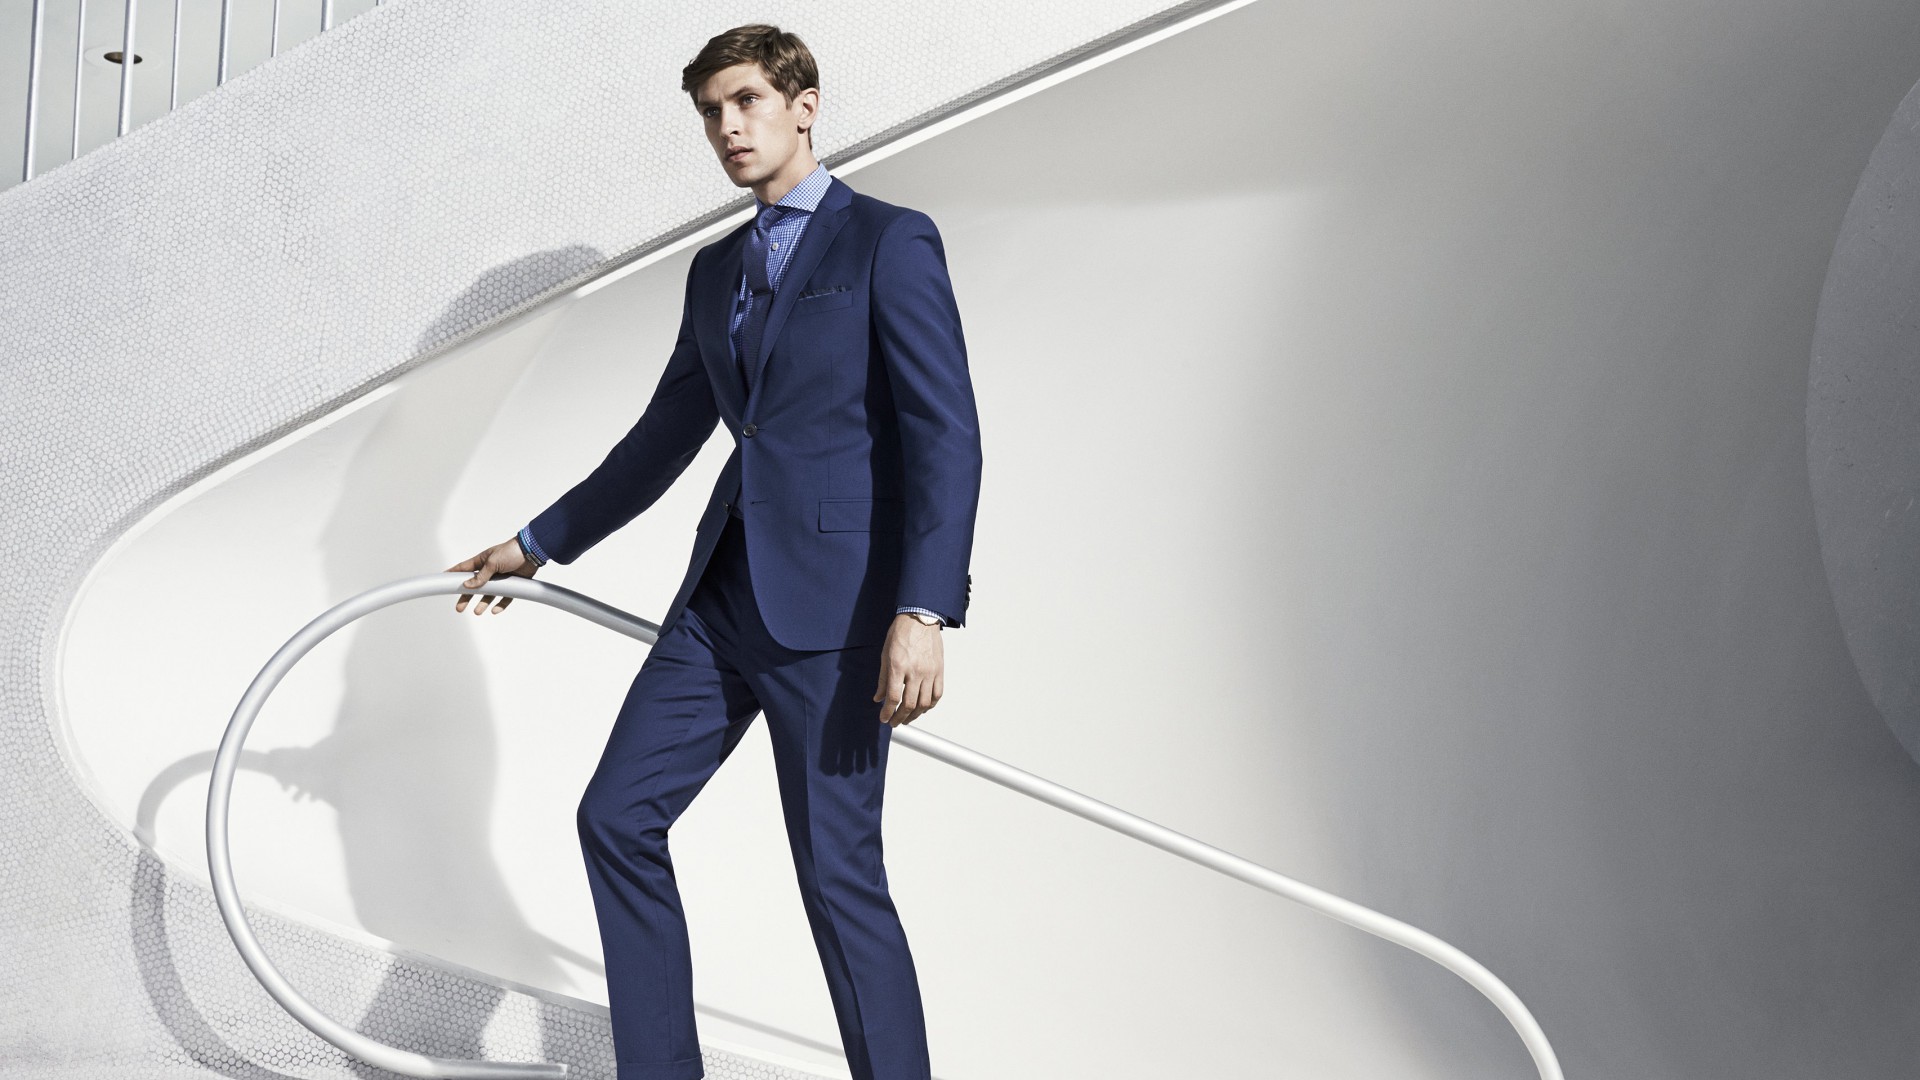 Матиас Лориндсен, Топ Модель 2015, модель, костюм, Mathias Lauridsen, Top Fashion Male Models, model, suit (horizontal)